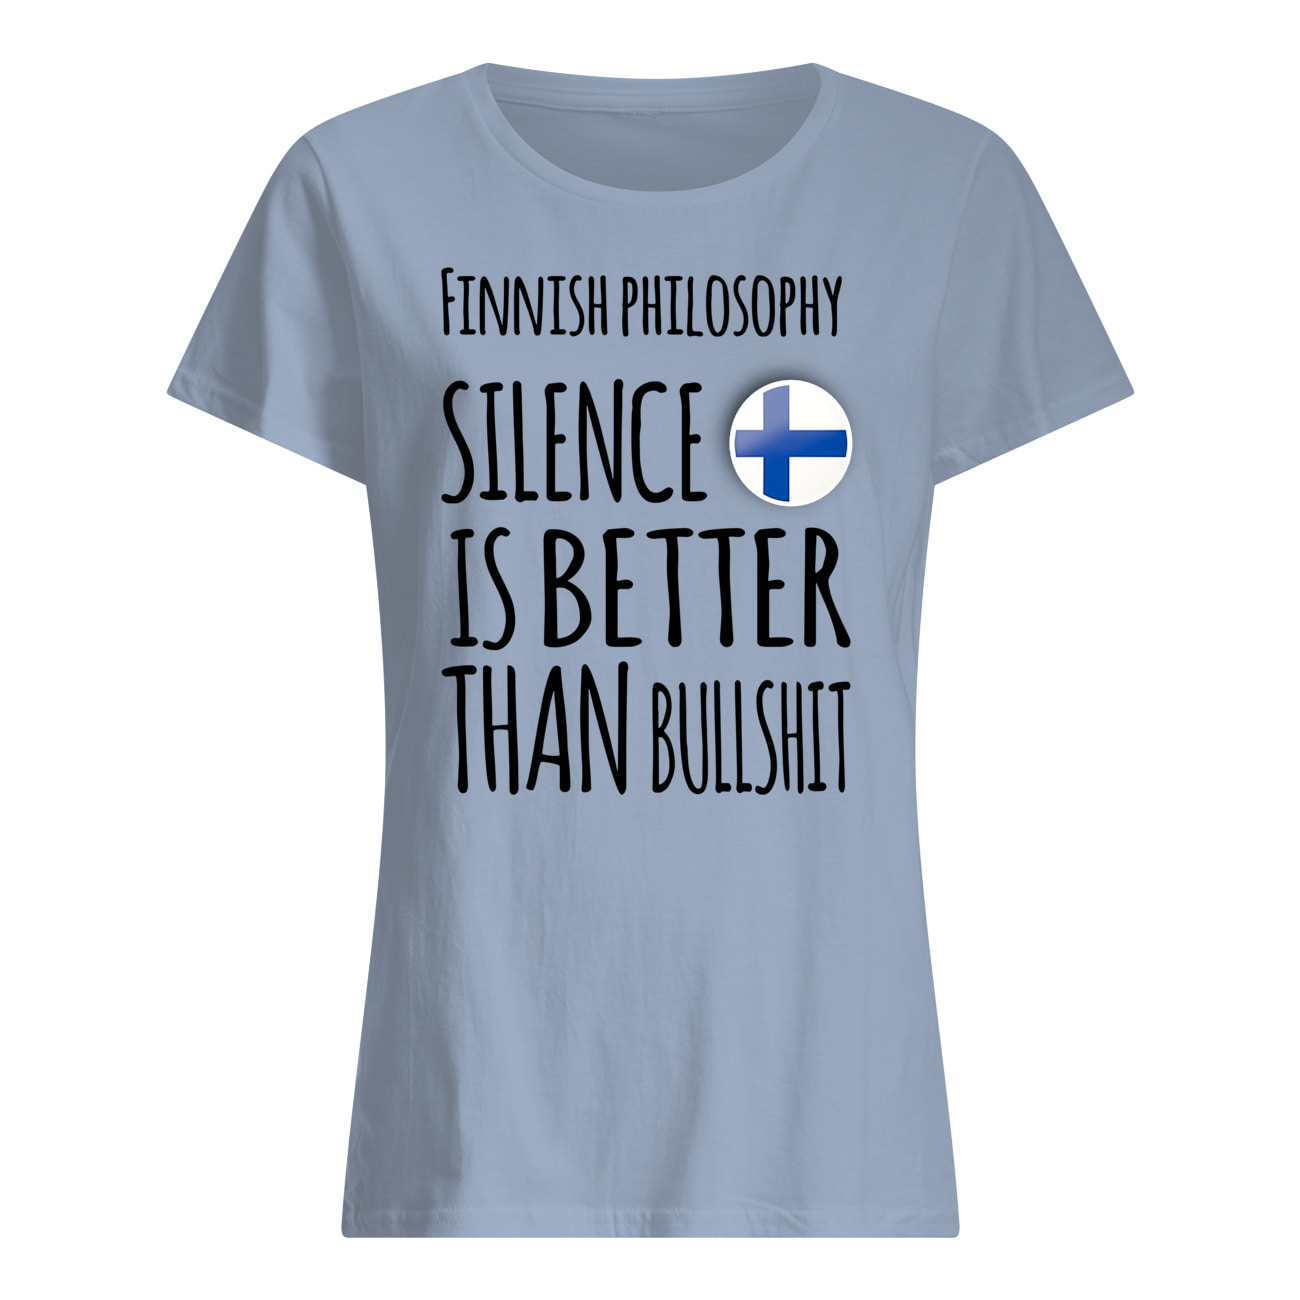 Finnish philosophy silence is better than bullshit womens shirt